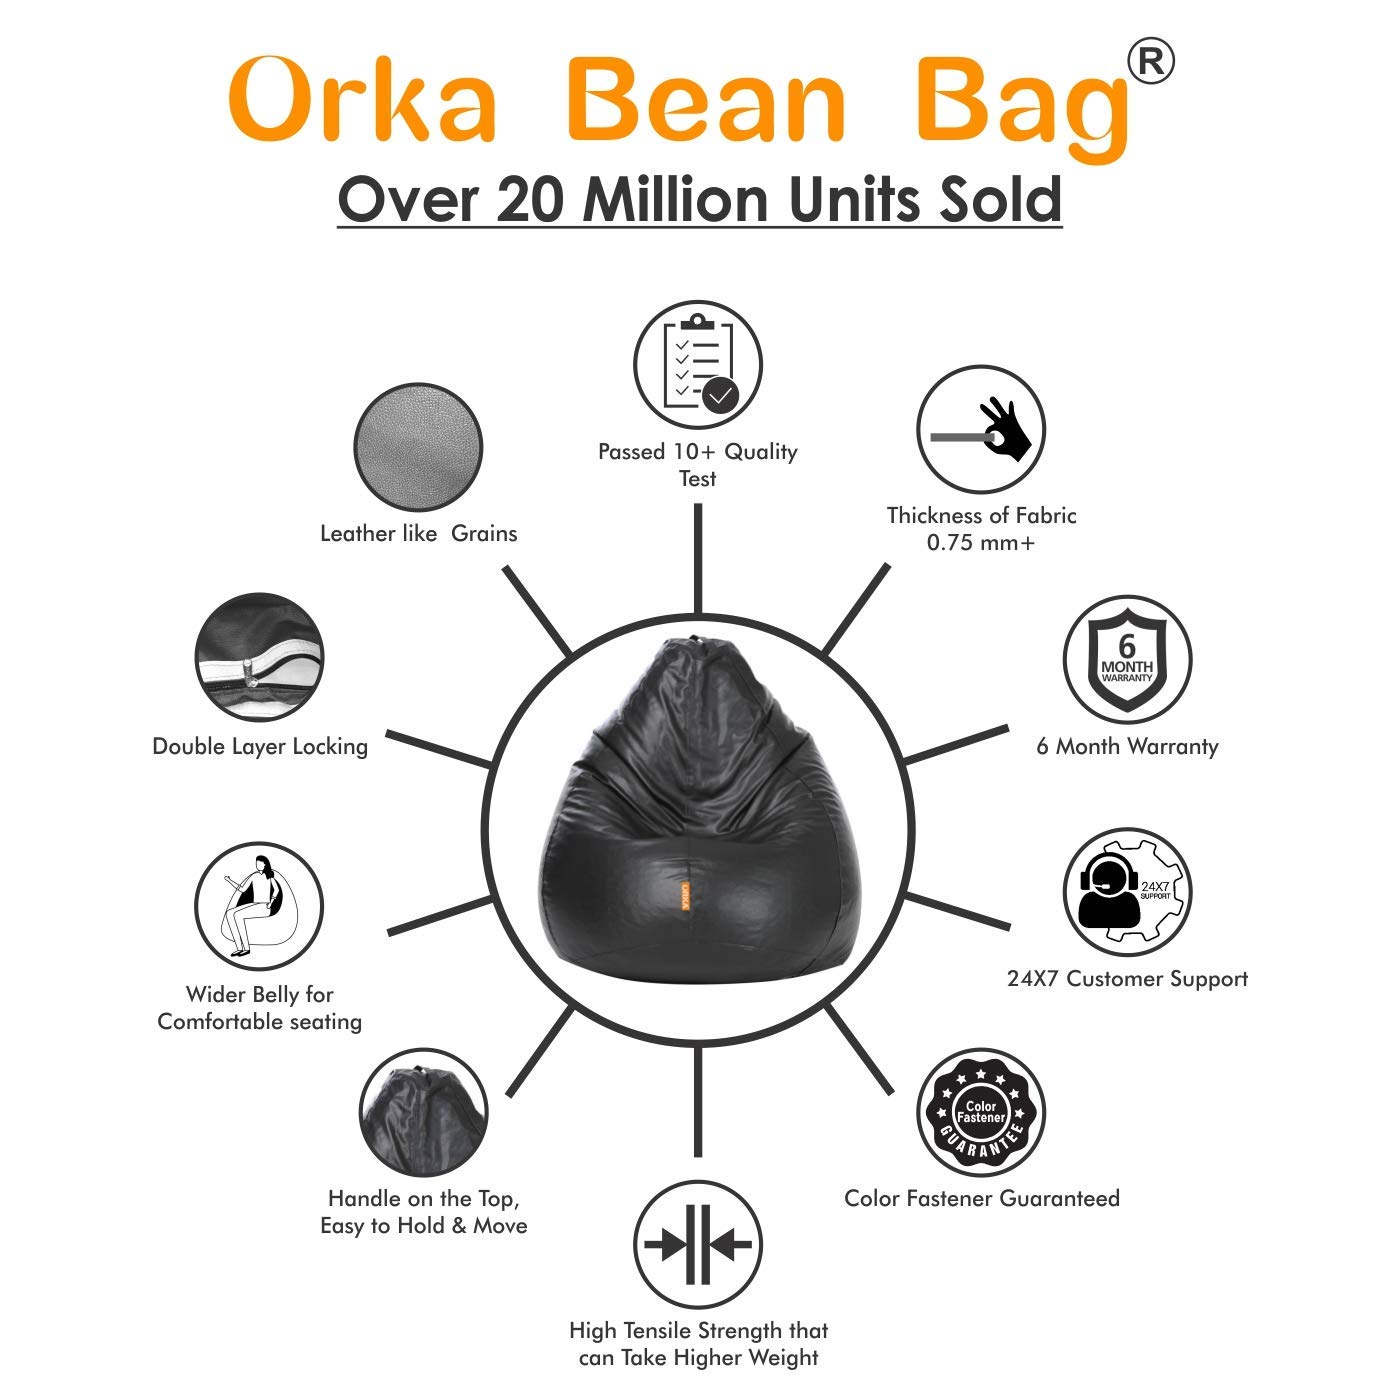 Orka Royale Digital Printed Design 3 Bean Bag